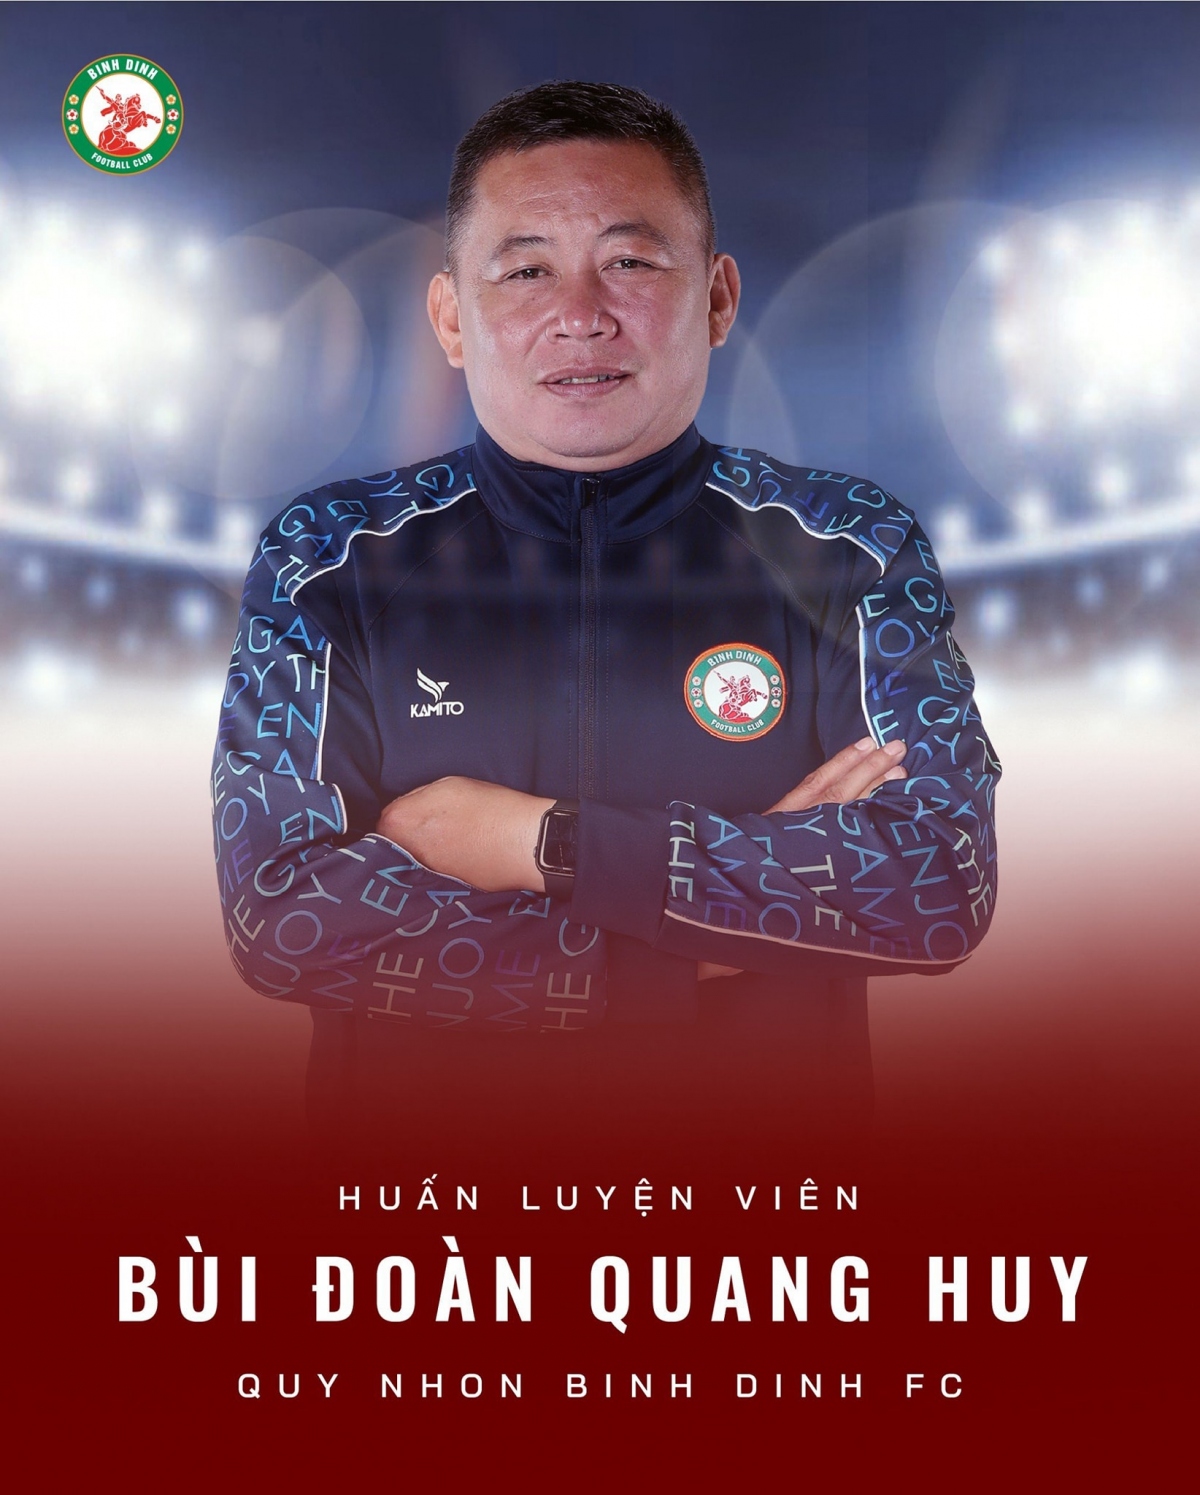 clb binh Dinh doi ten truoc them v-league 2023 2024 hinh anh 2